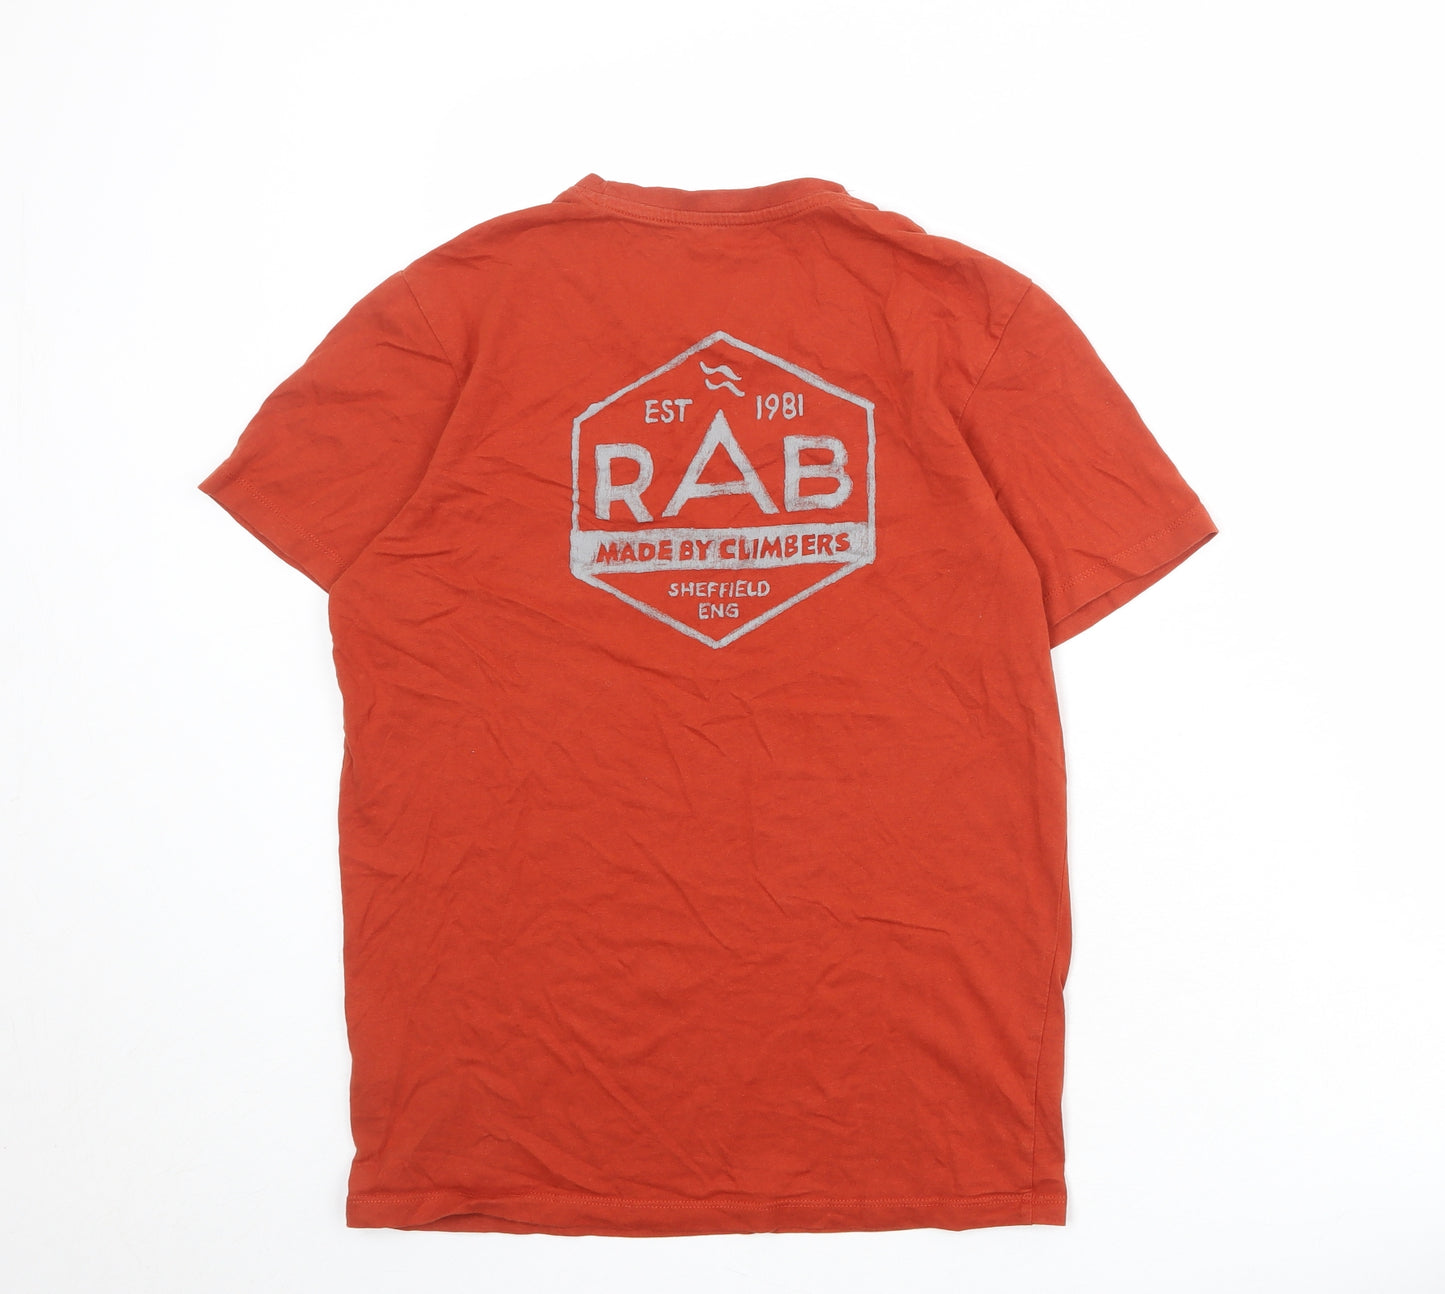 RAB Mens Orange Cotton T-Shirt Size S Round Neck